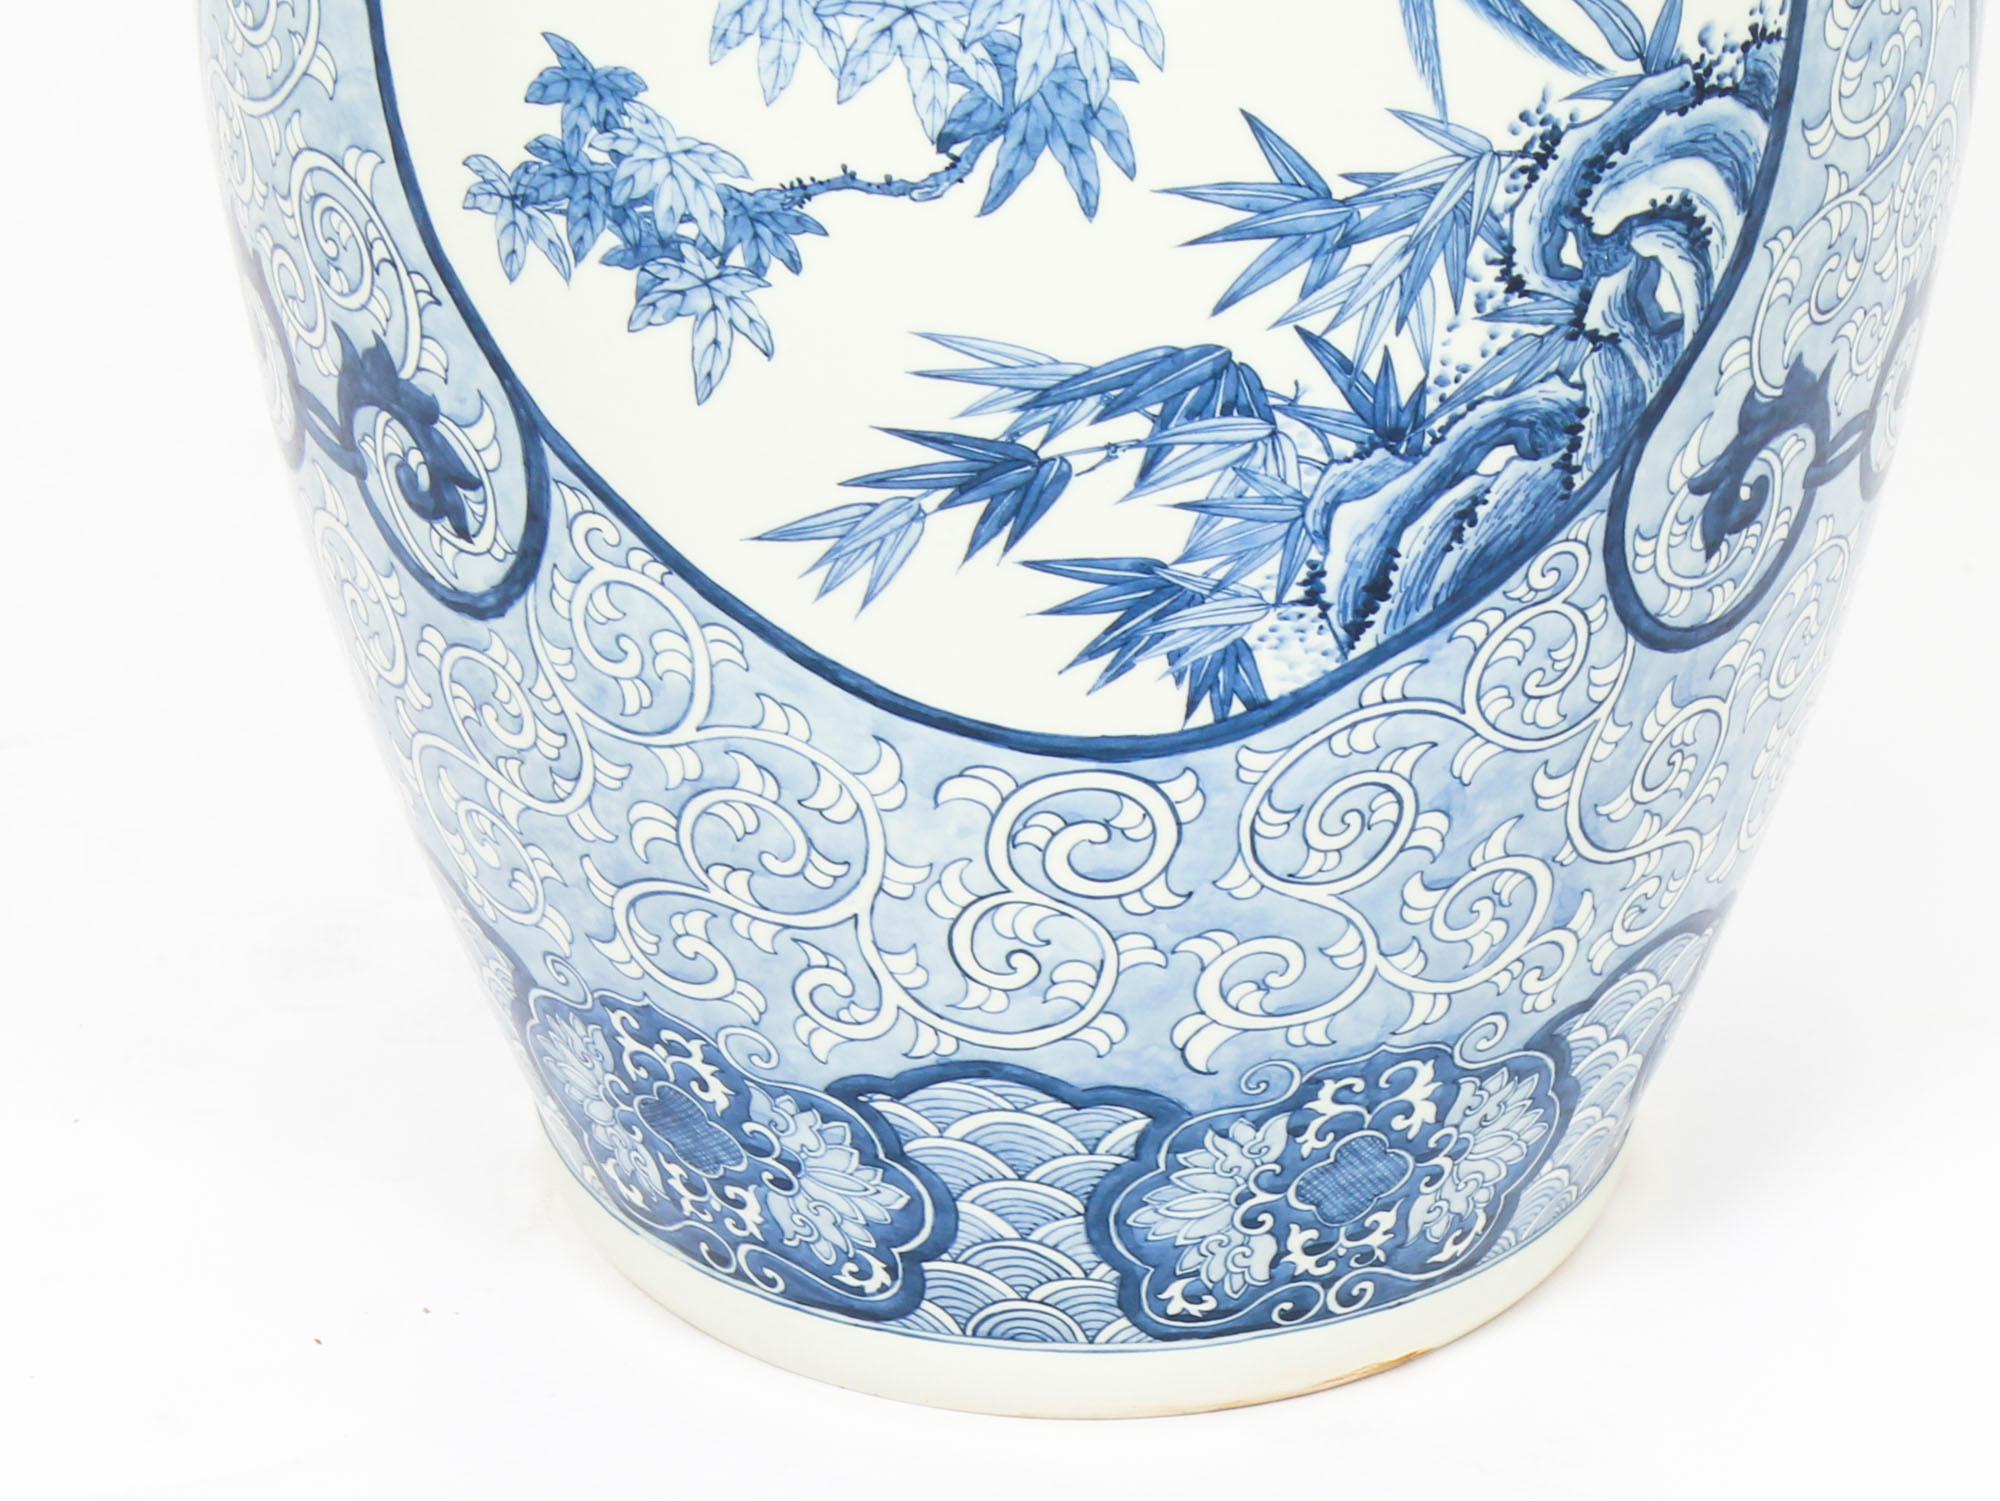 imari blue and white porcelain